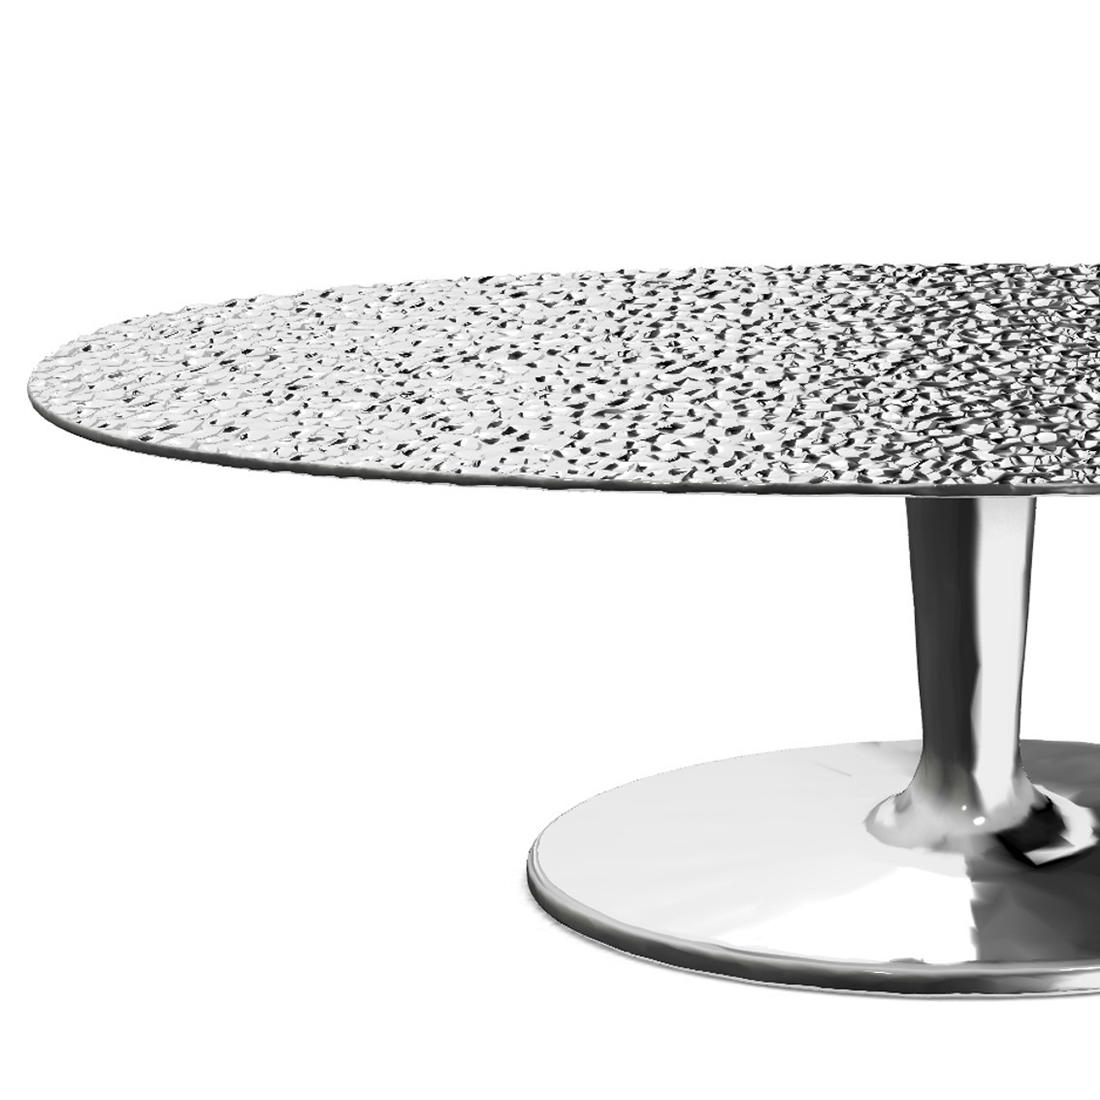 Coffee table Alu drops in polished casted
aluminium. Hand-hammered aluminium.